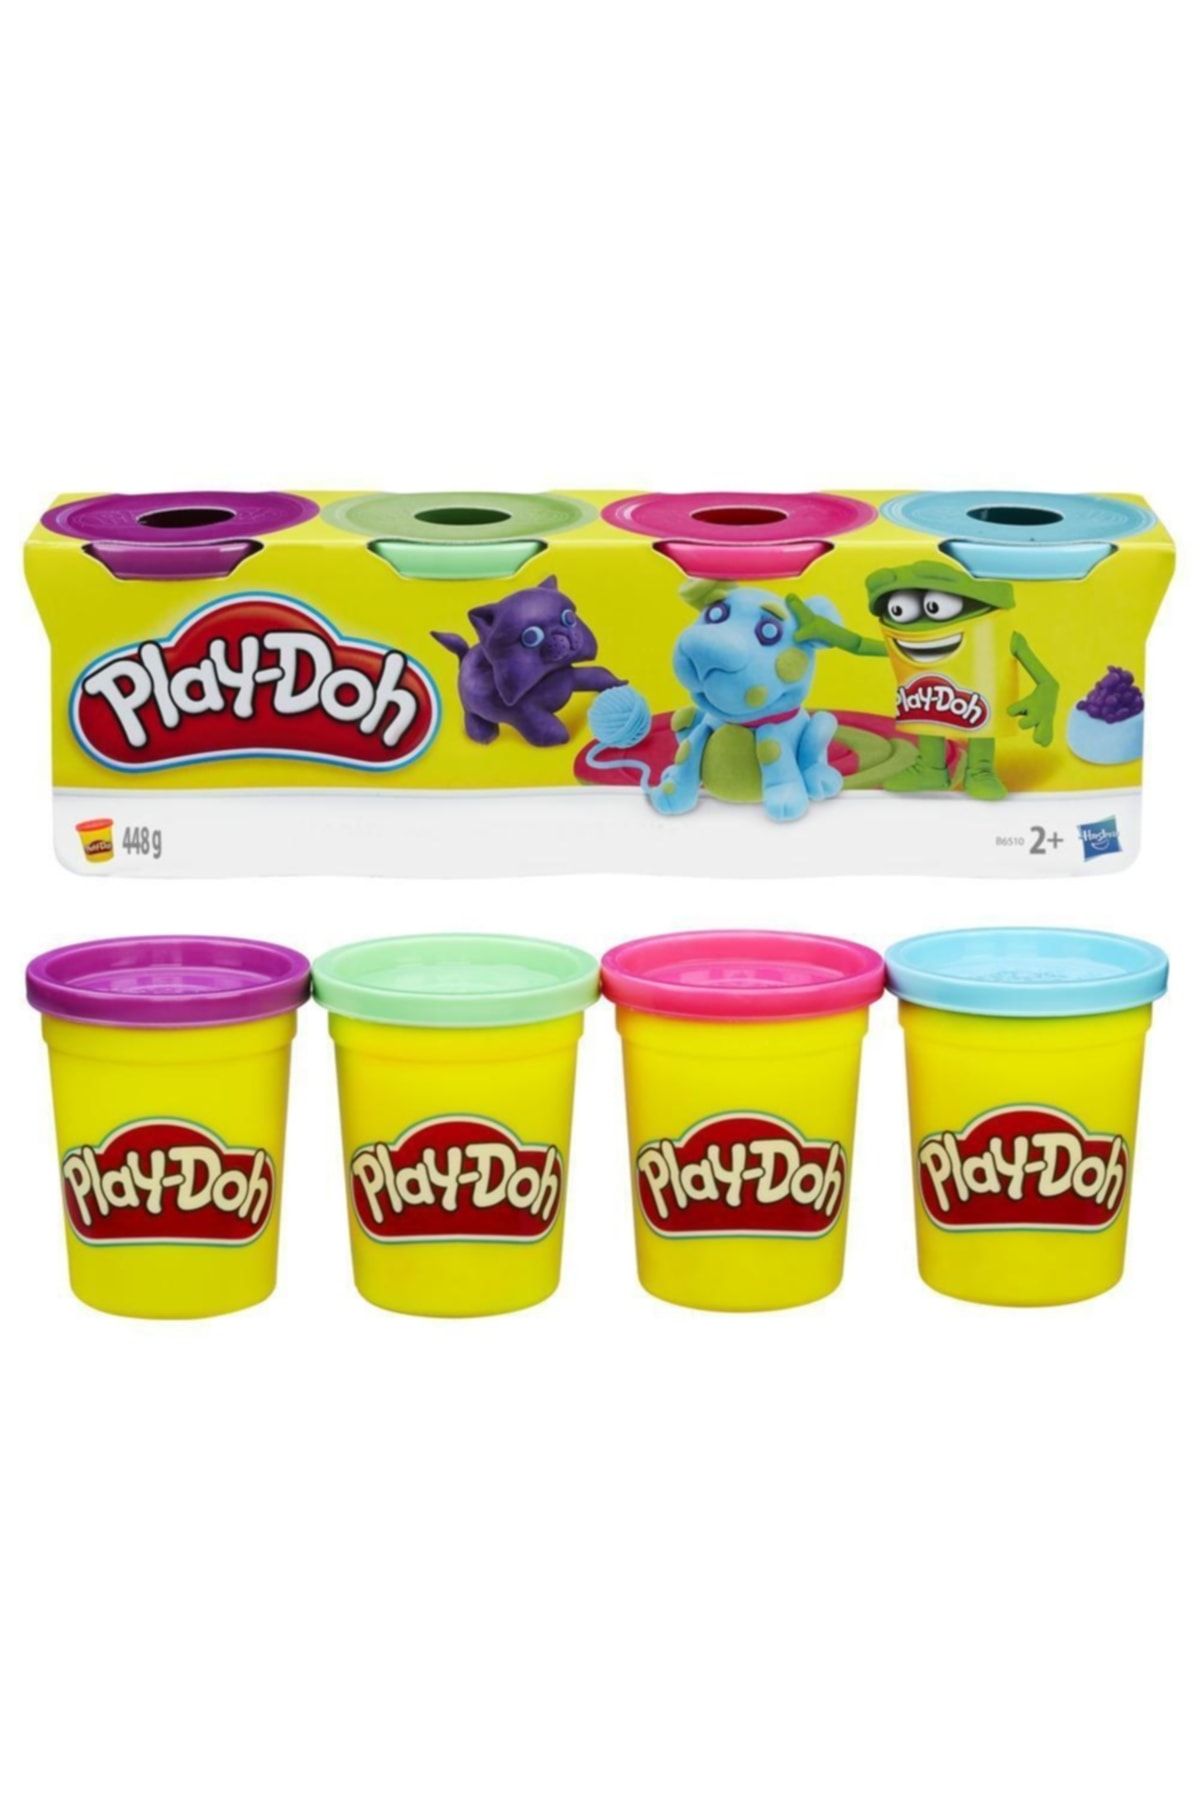 Play Doh Oyun Hamuru 448 Gr 4 Renk 1 Paket / Mor - Yeşil - Pembe - Turkuaz